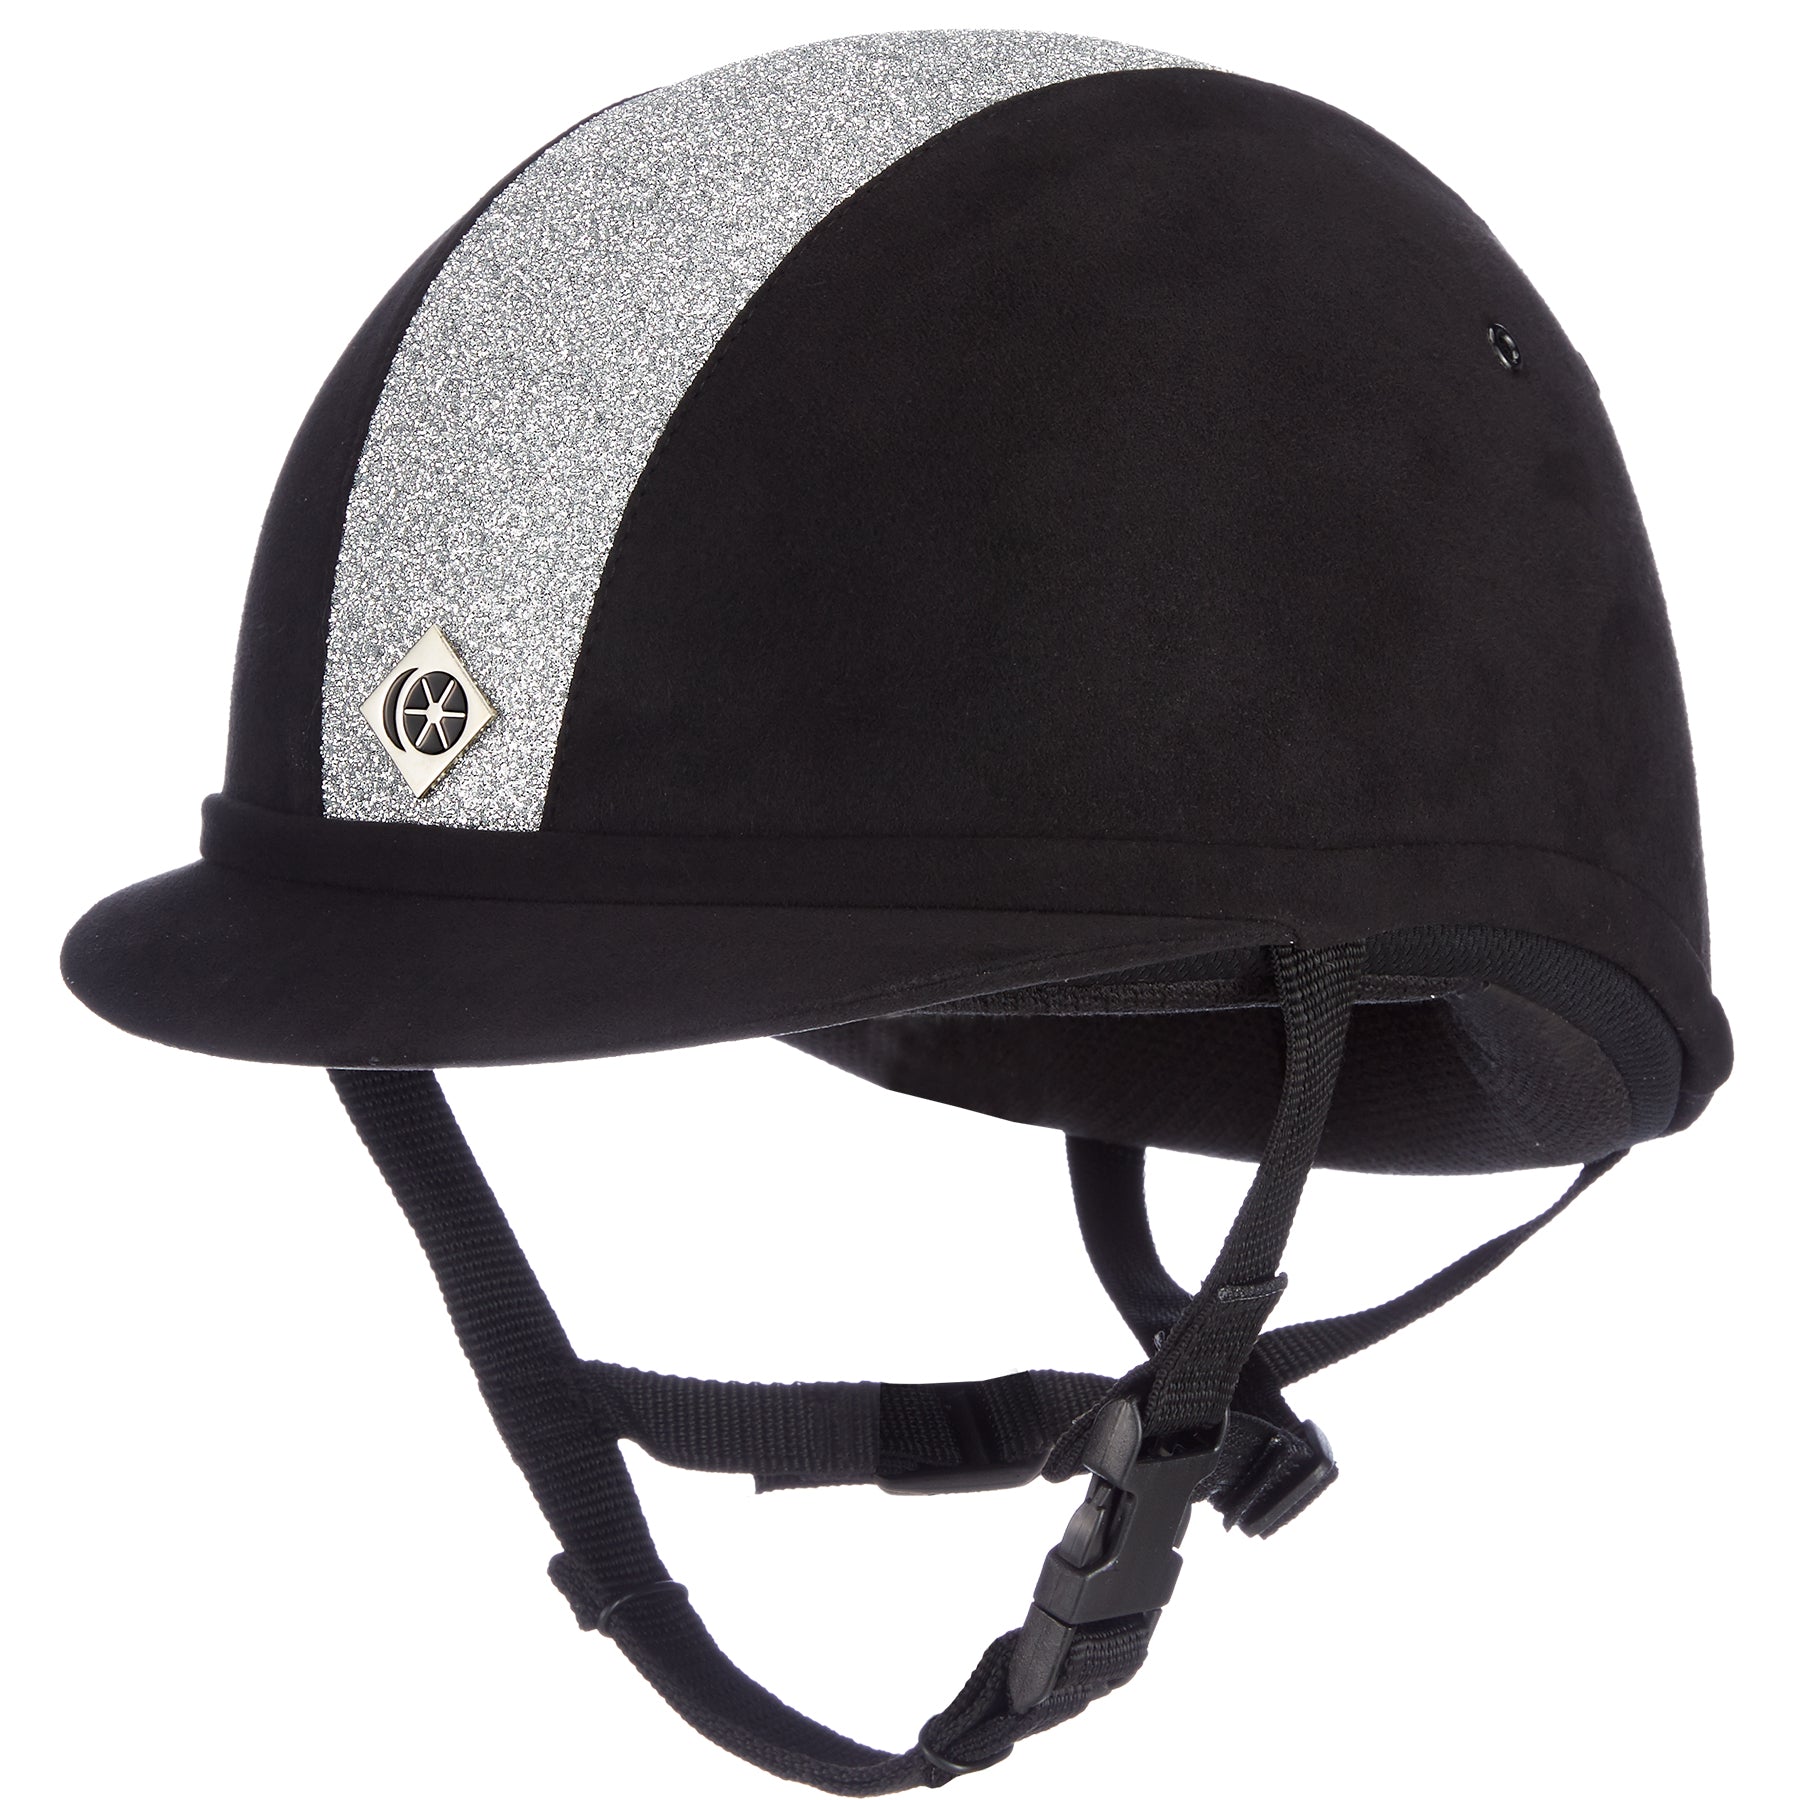 Charles Owen YR8 - Riding Hat - Sparkly Centre Black/Silver 